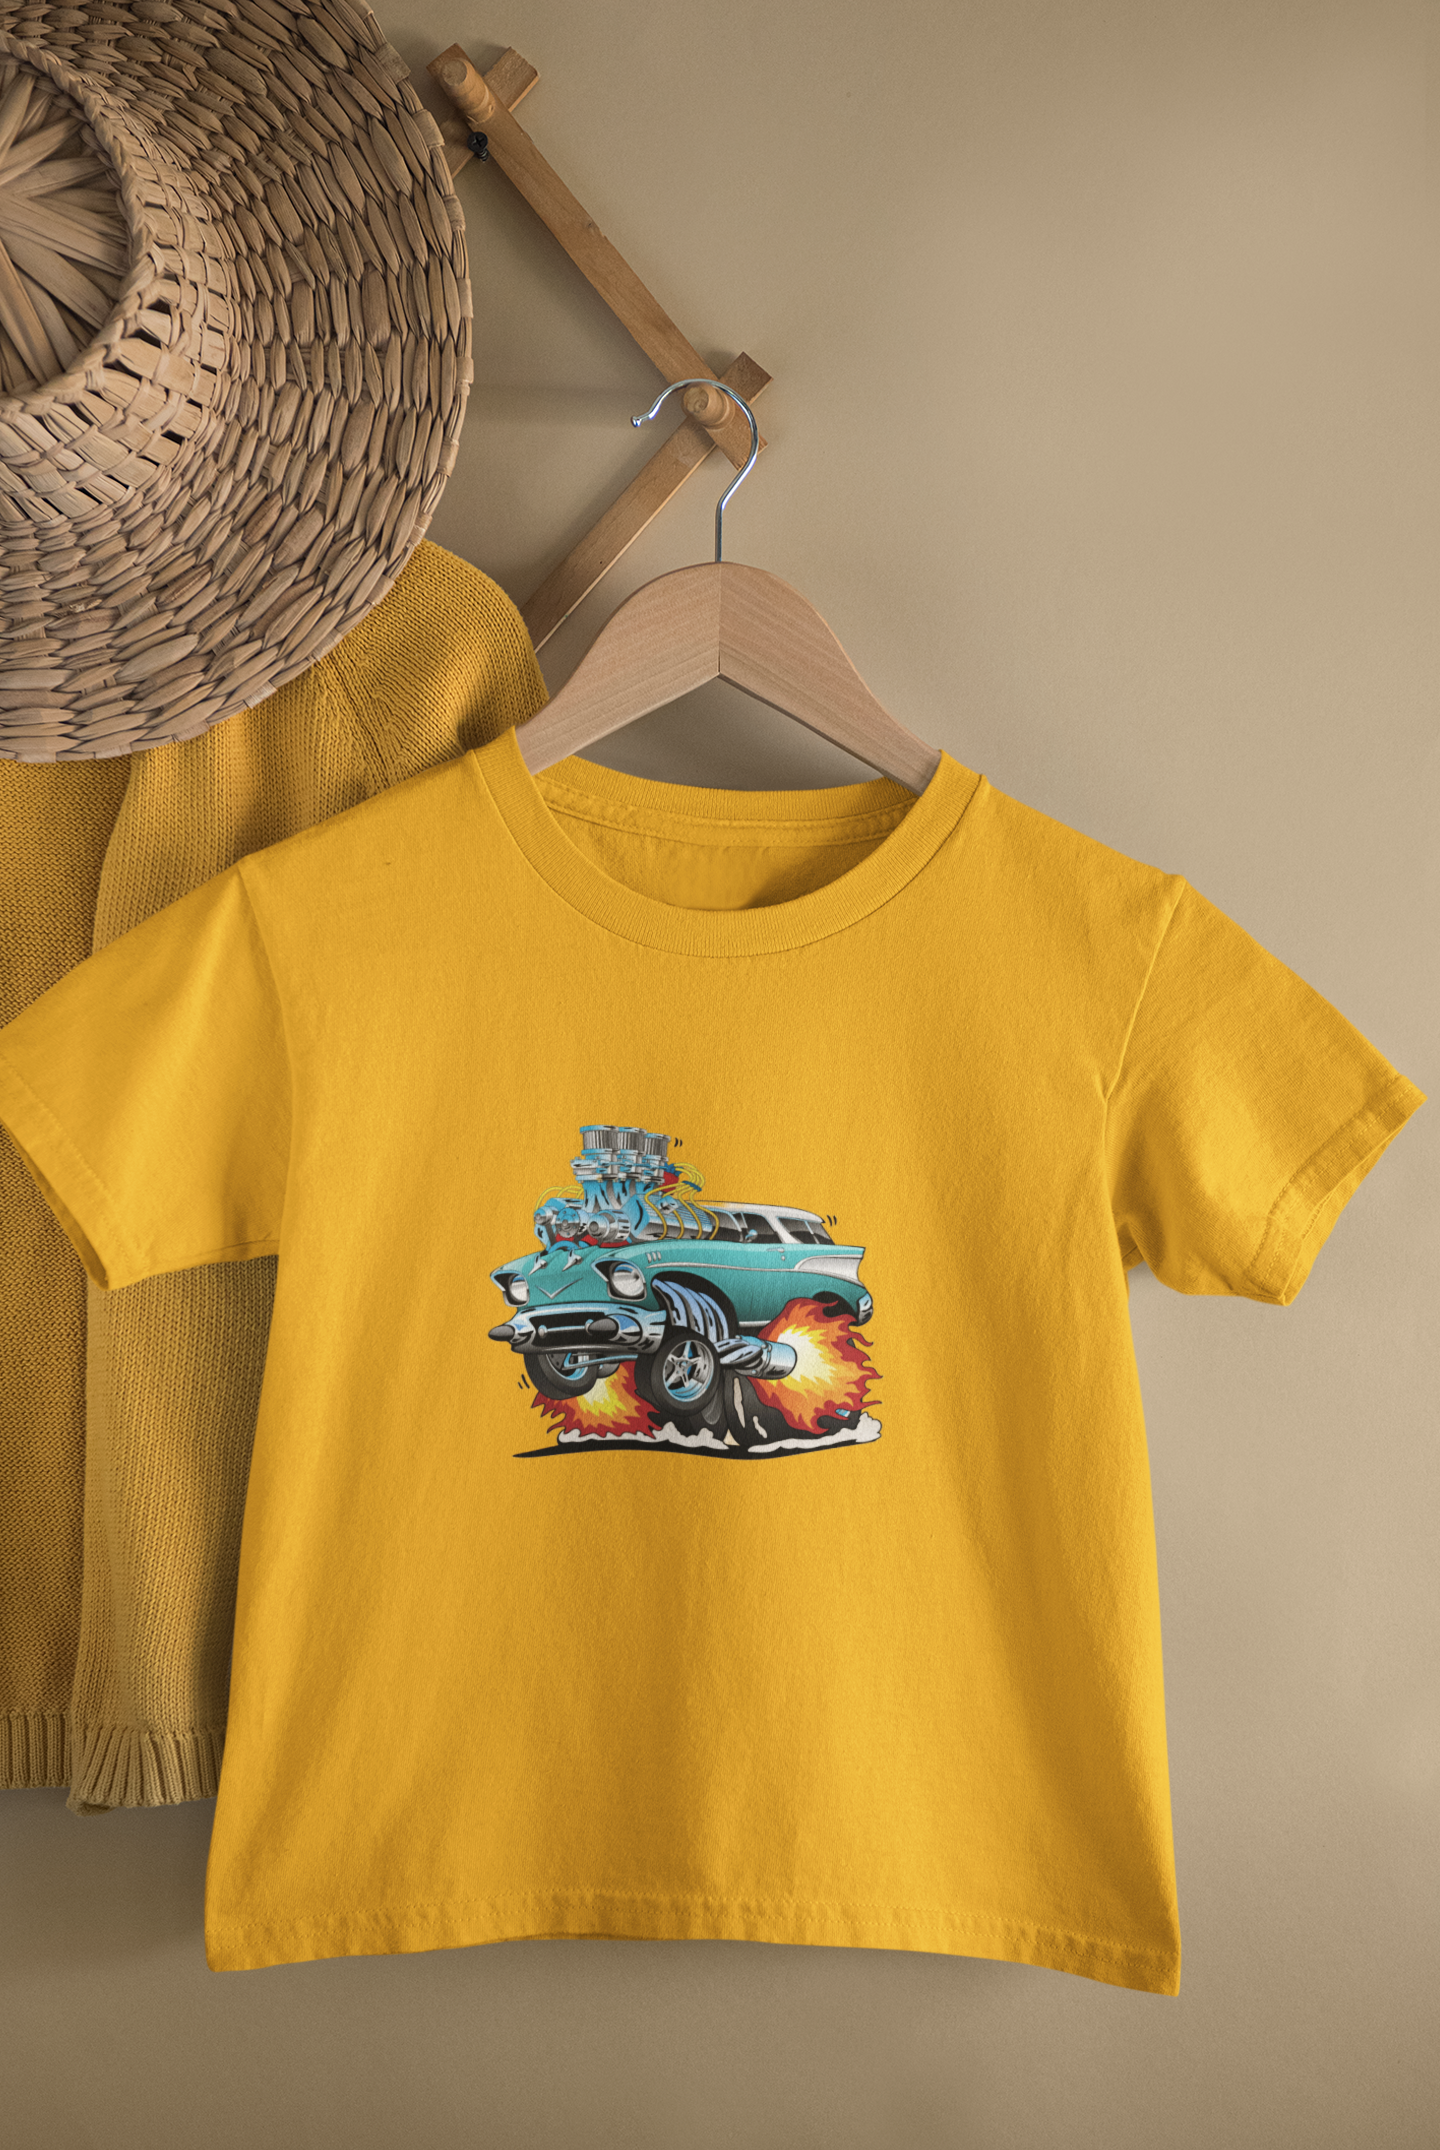 Classic Banger Car - Kids Tee